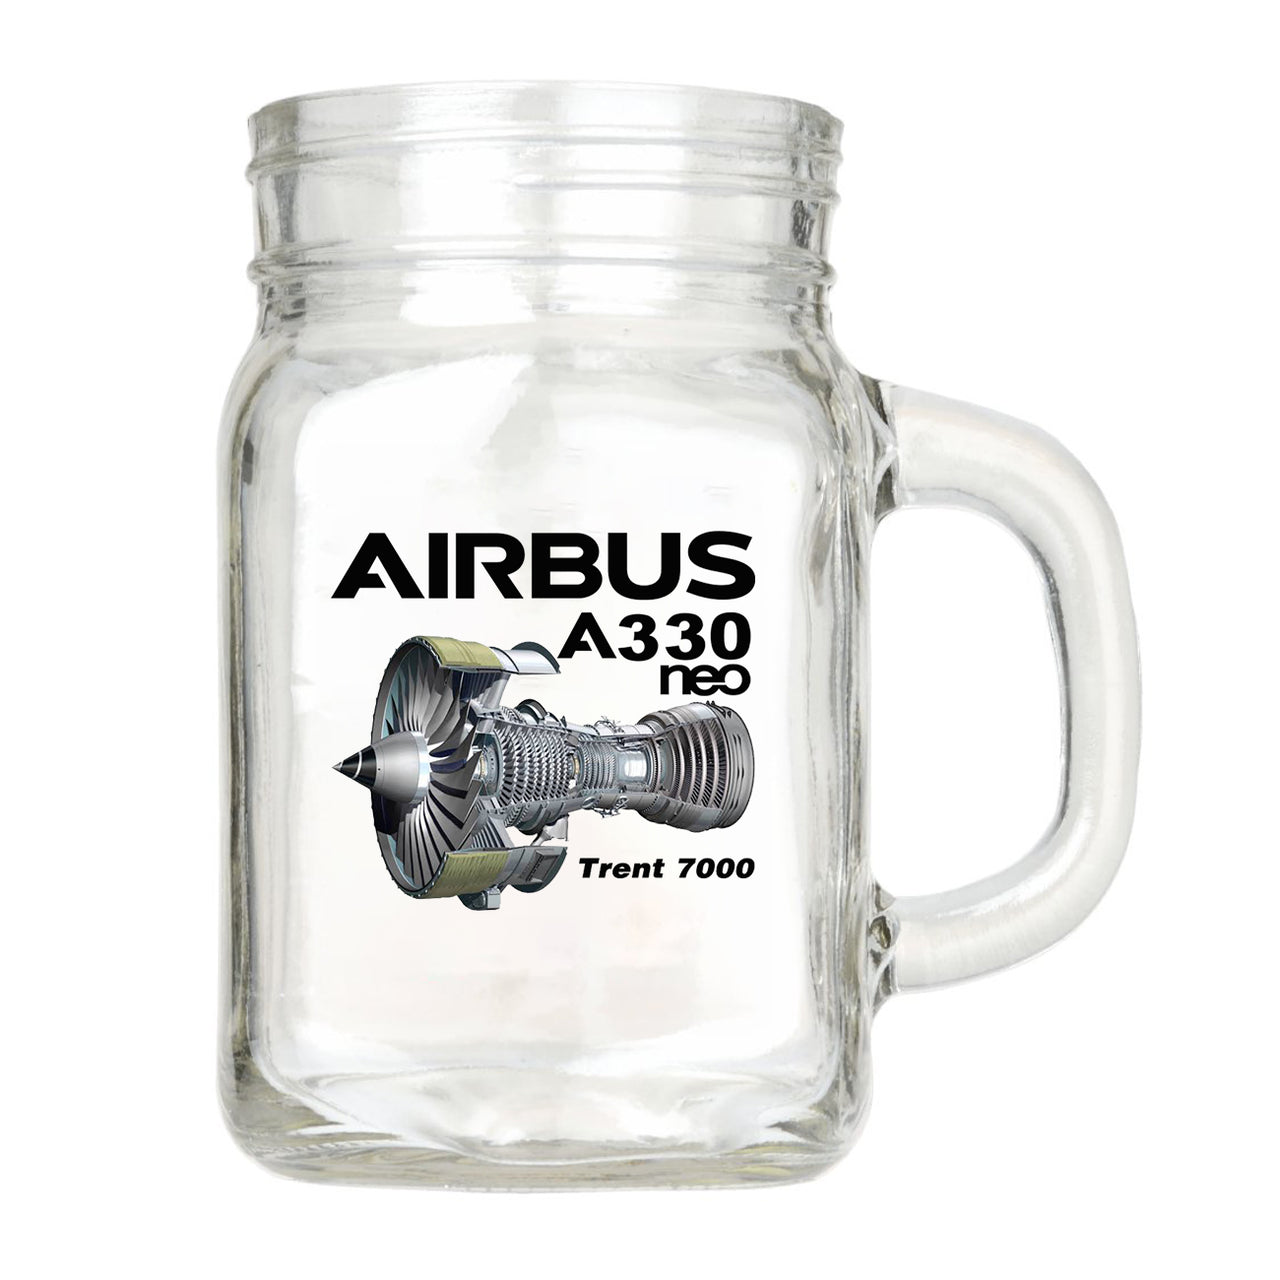 Airbus A330neo & Trent 7000 Designed Cocktail Glasses